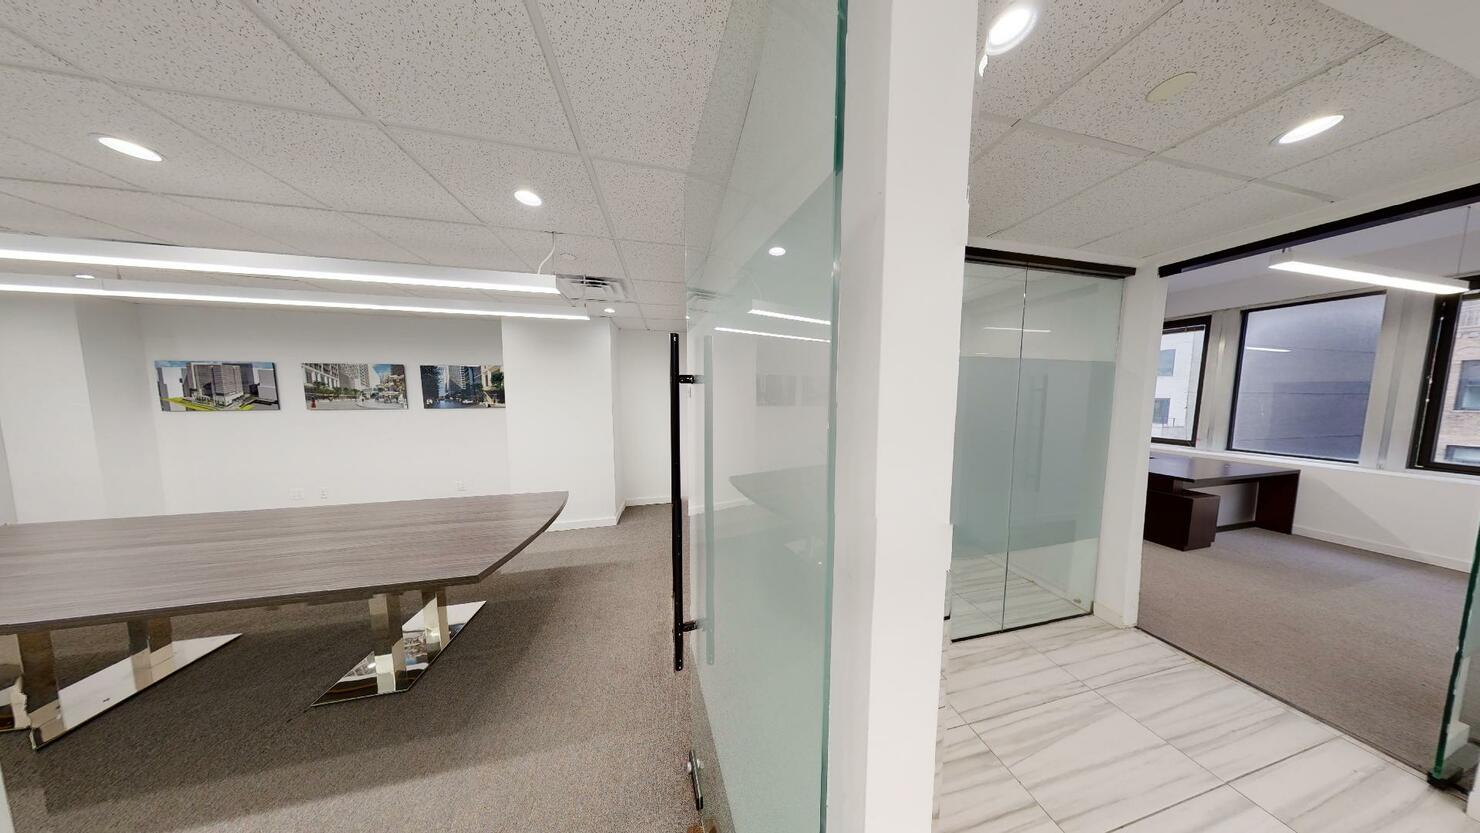 369 Lexington Avenue Office Space - Conference Room